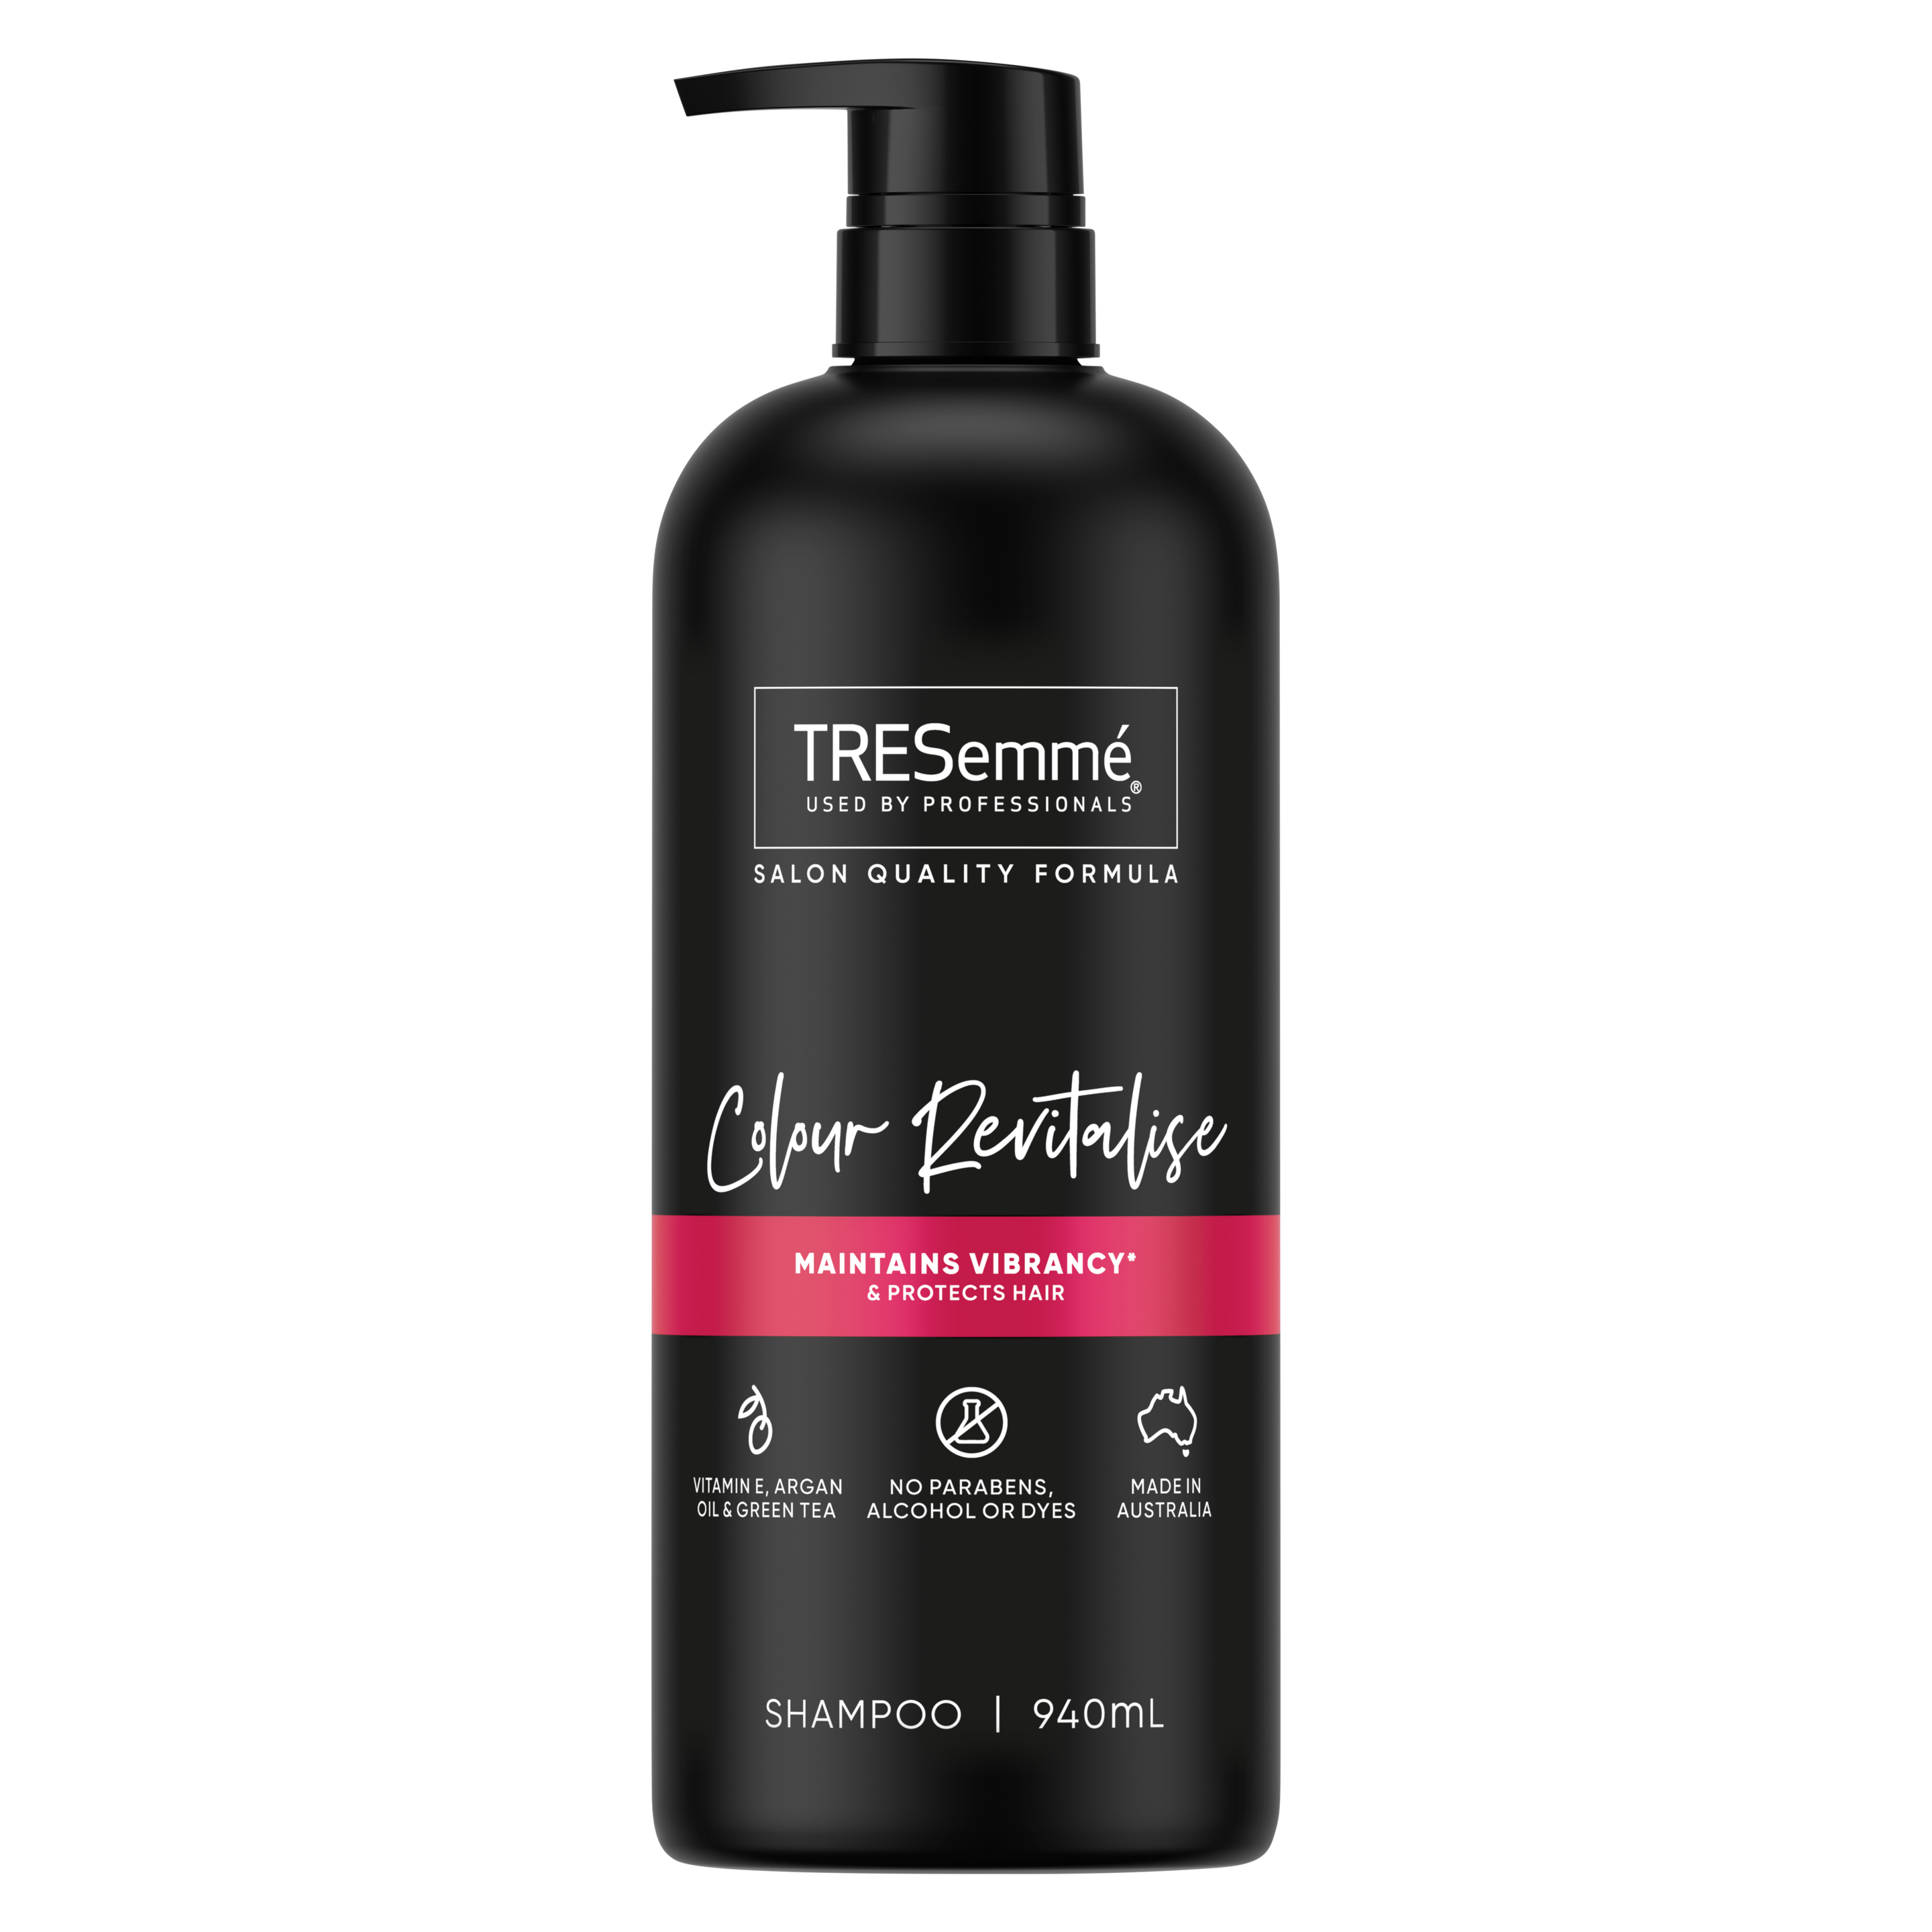 A 940ml bottle of TRESemmé Colour Revitalise Shampoo